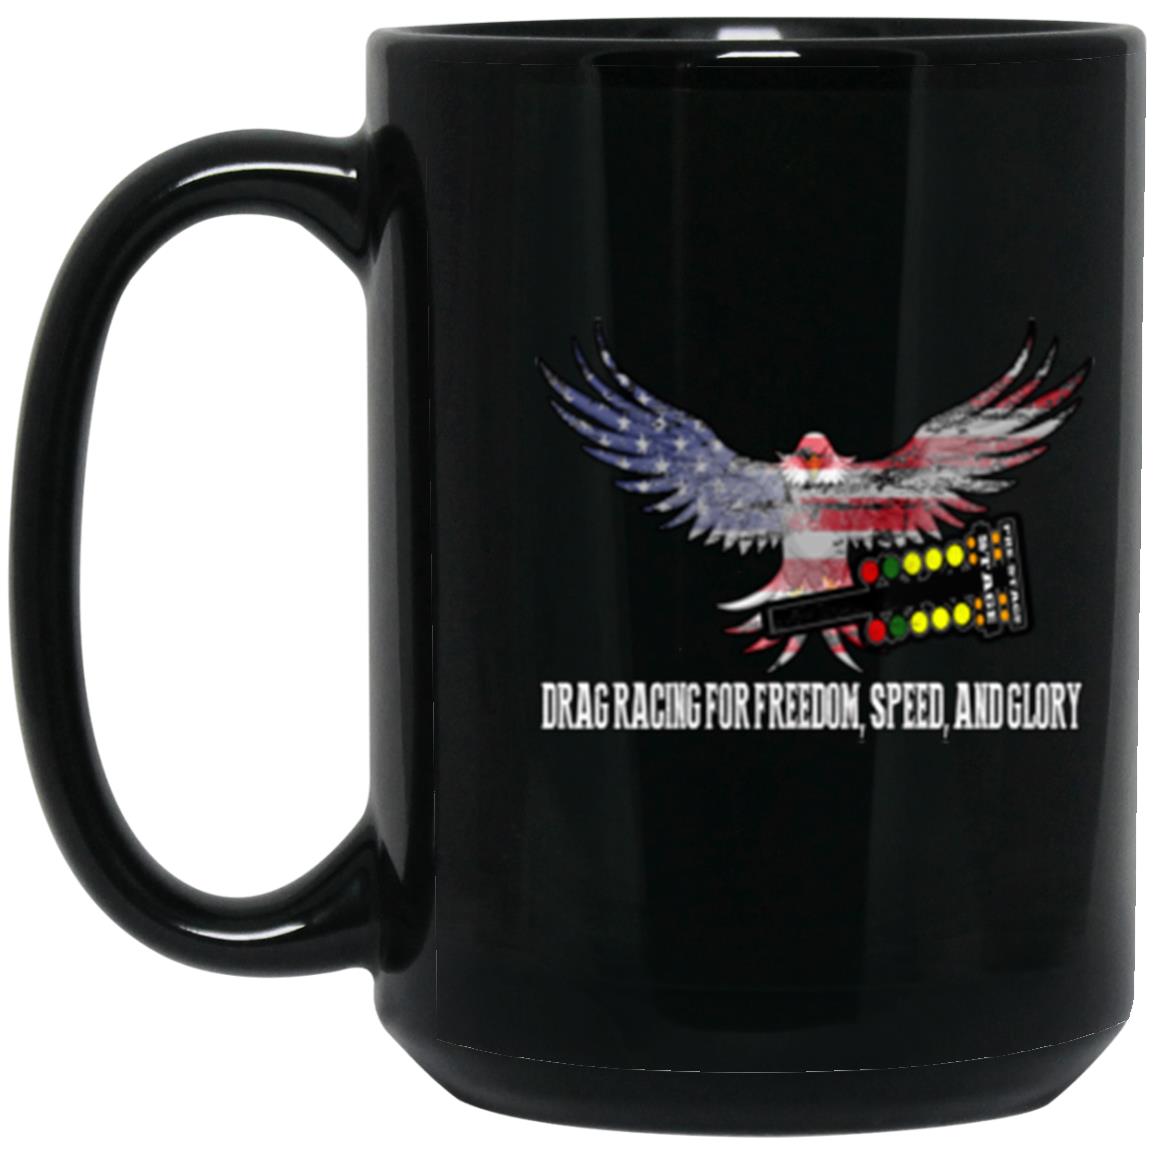 Drag Racing for Freedom, Speed, and Glory 15 oz. Black Mug